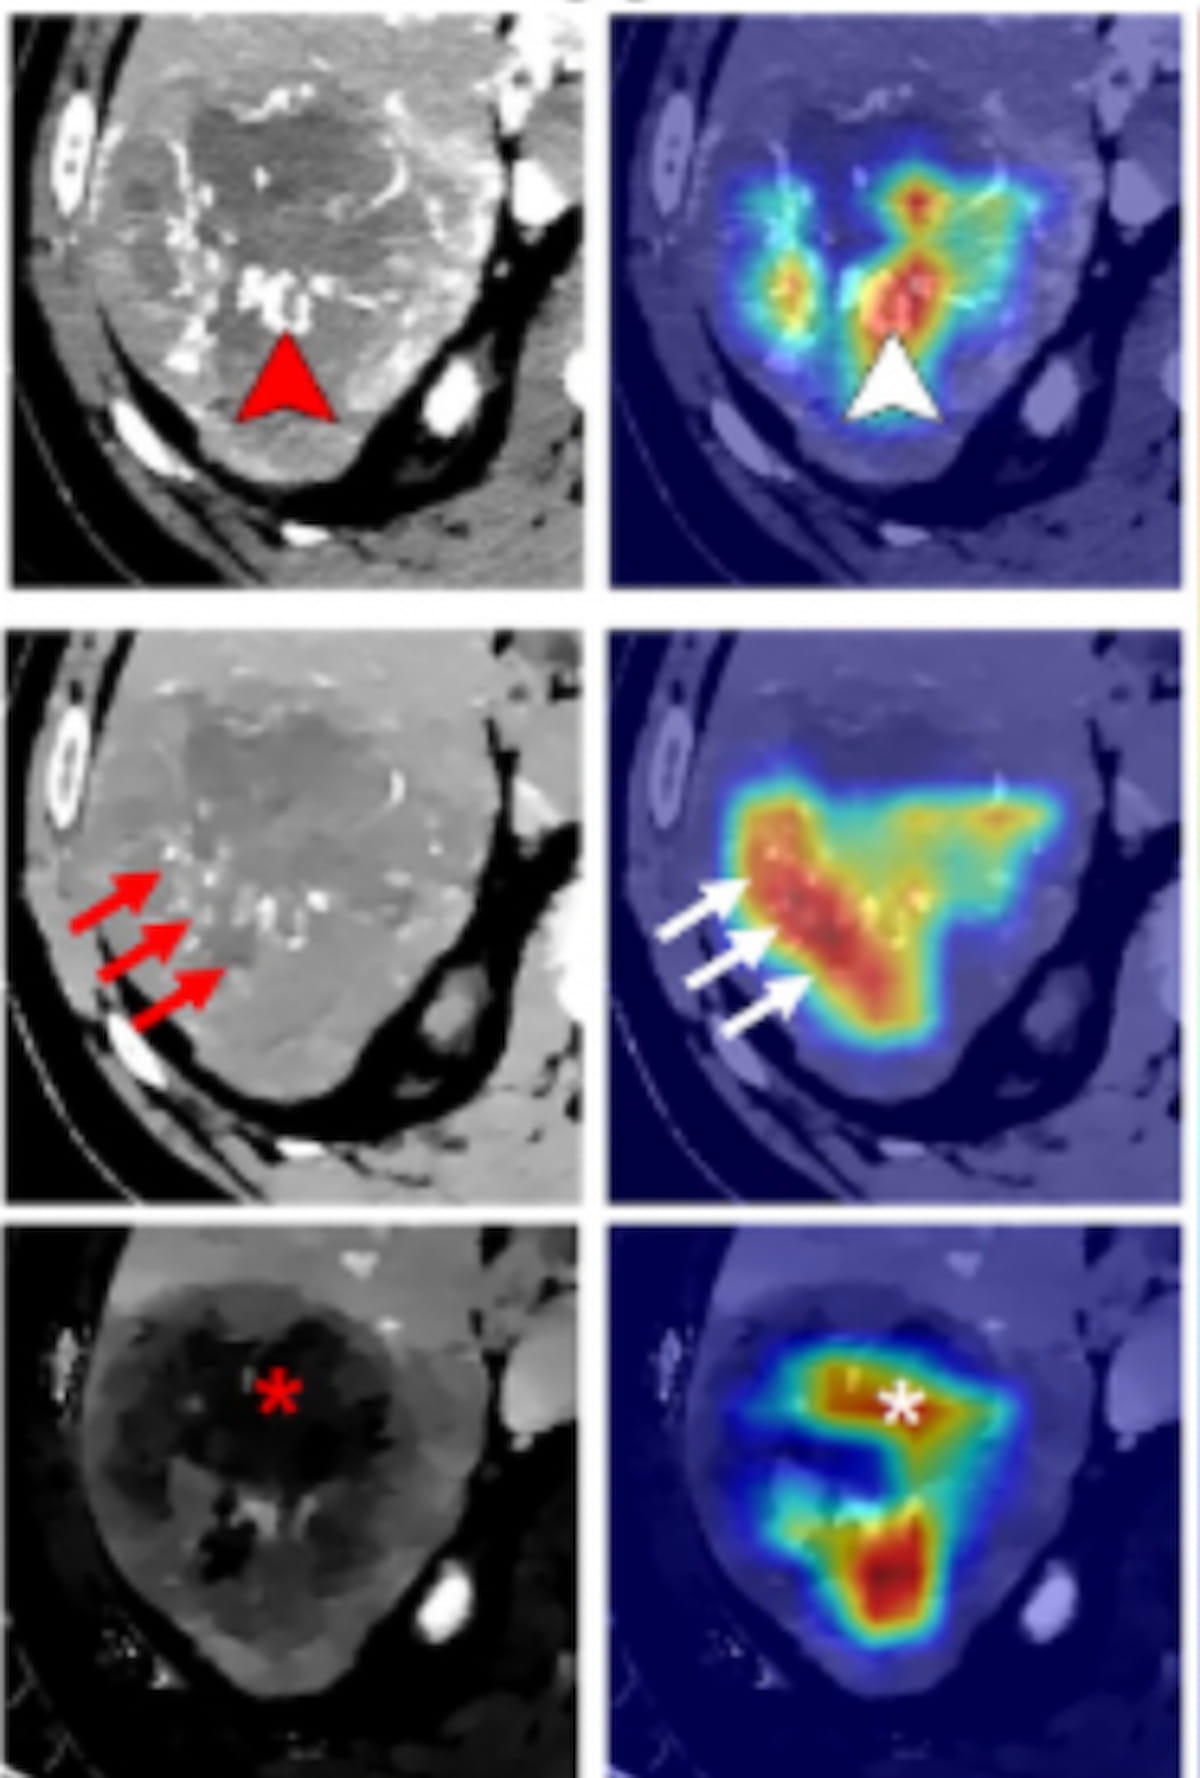 Can Dual-Energy CT Radiomics Improve Risk Assessment for Macrotrabecular-Massive Hepatocellular Carcinoma?